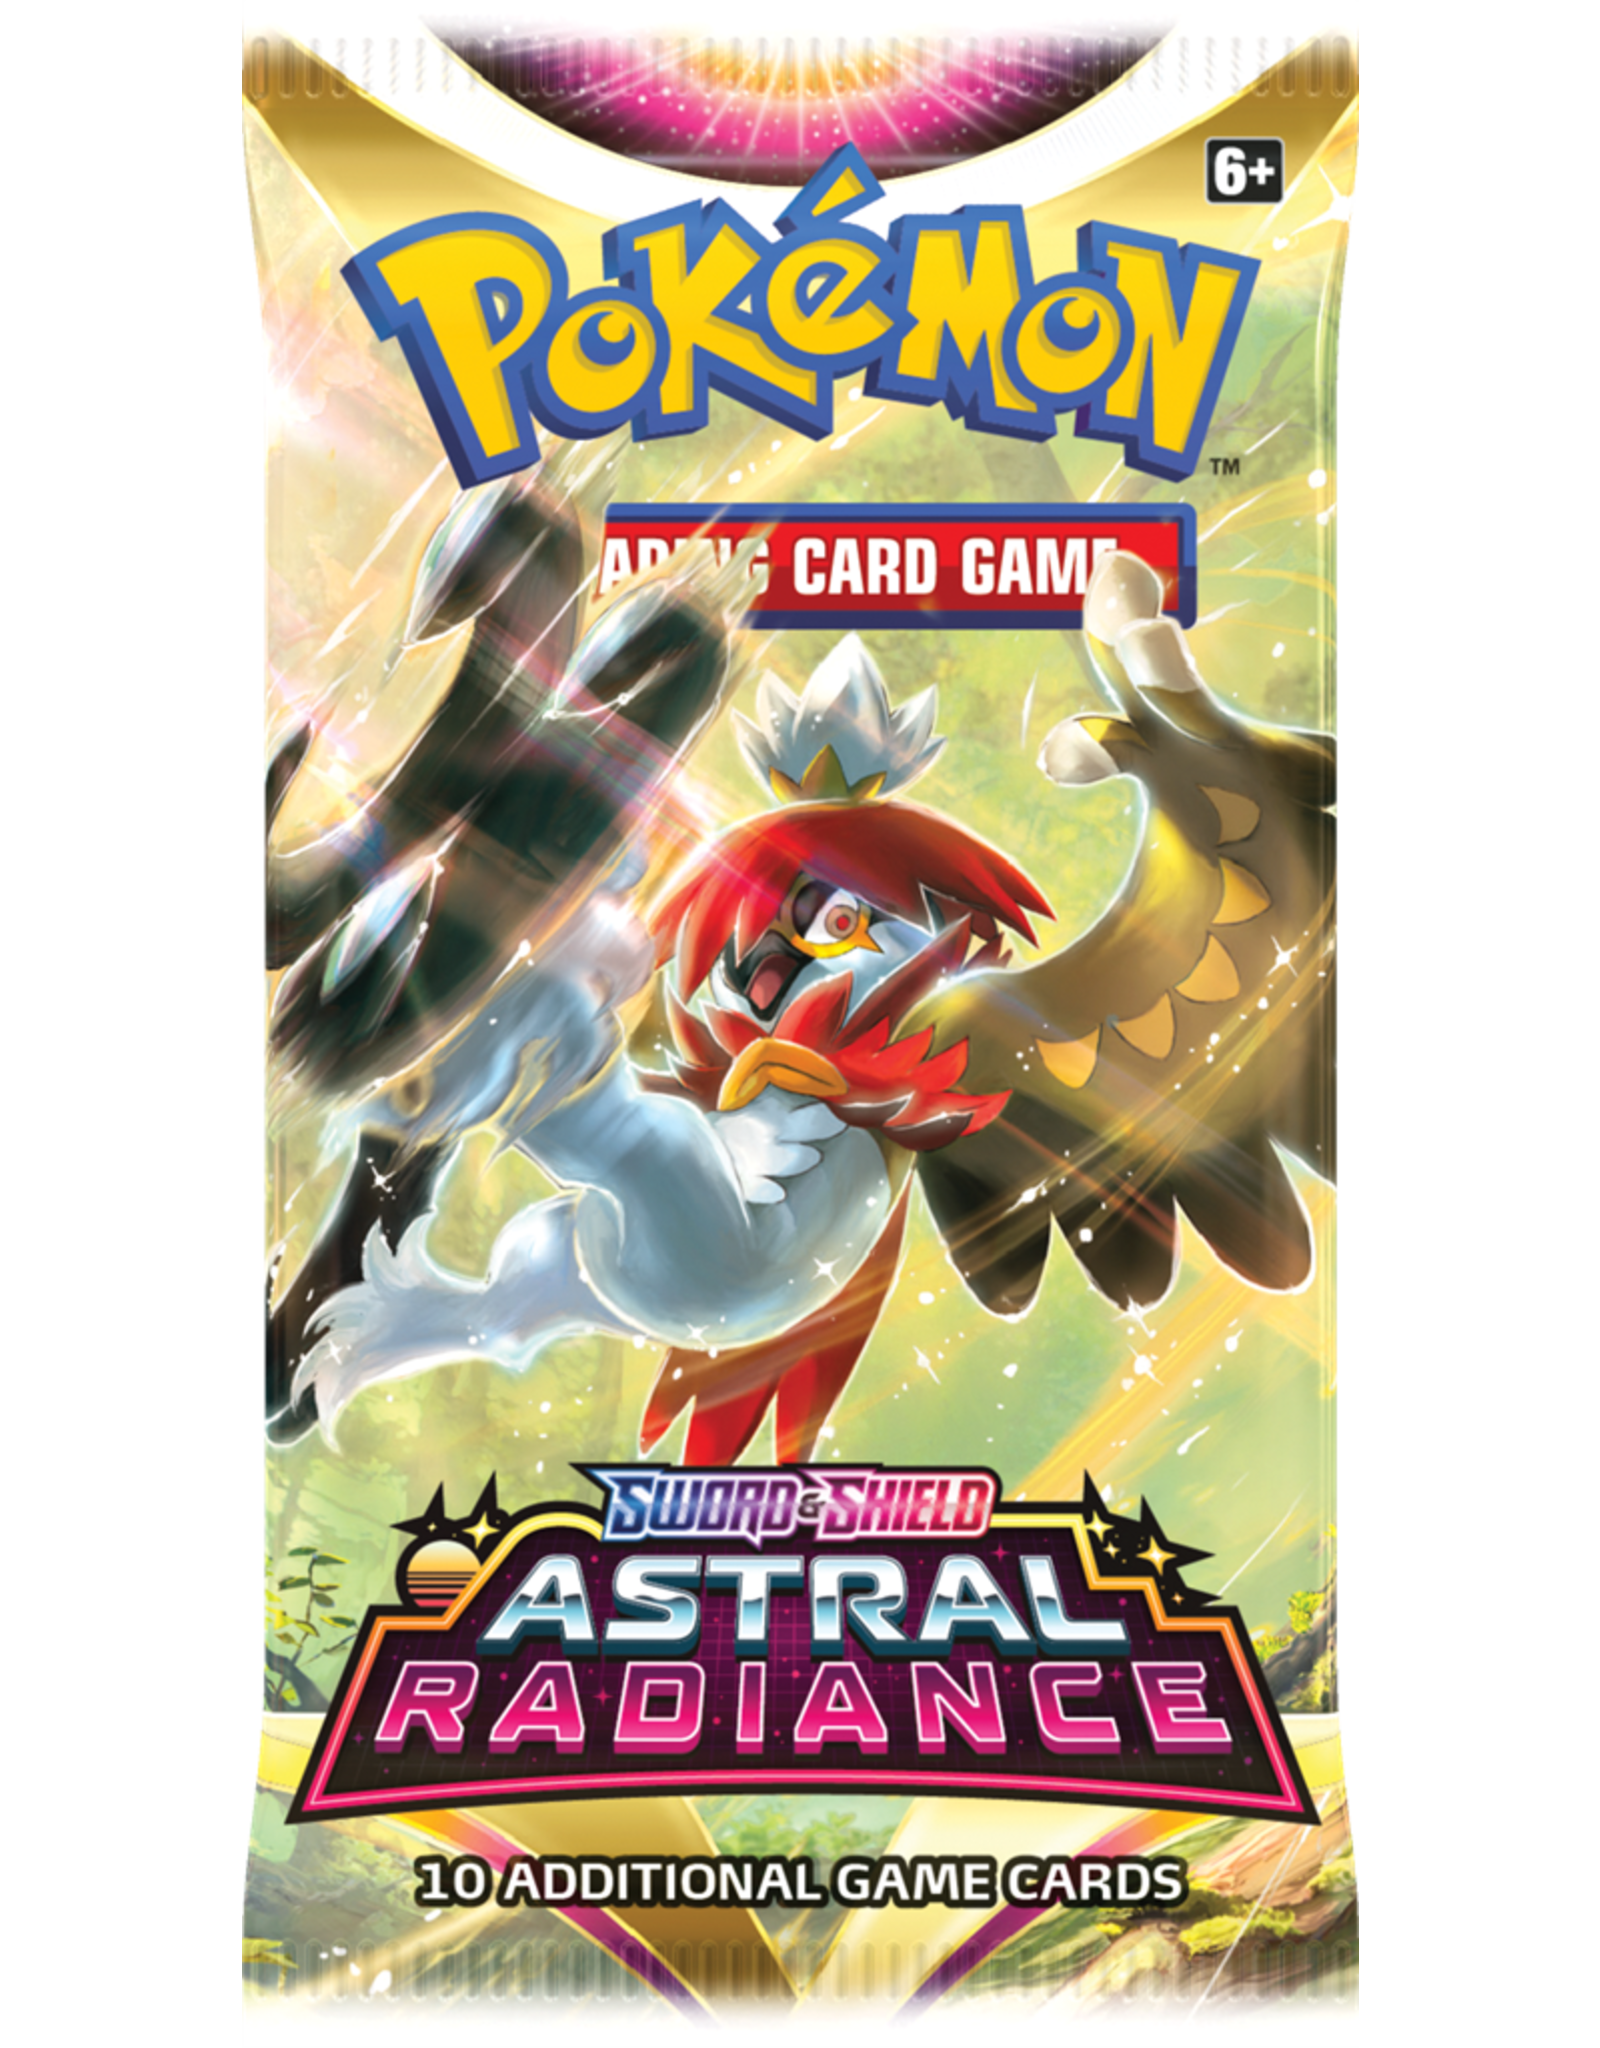 The Pokemon Company Pokémon TCG Sword & Shield Astral Radiance Booster